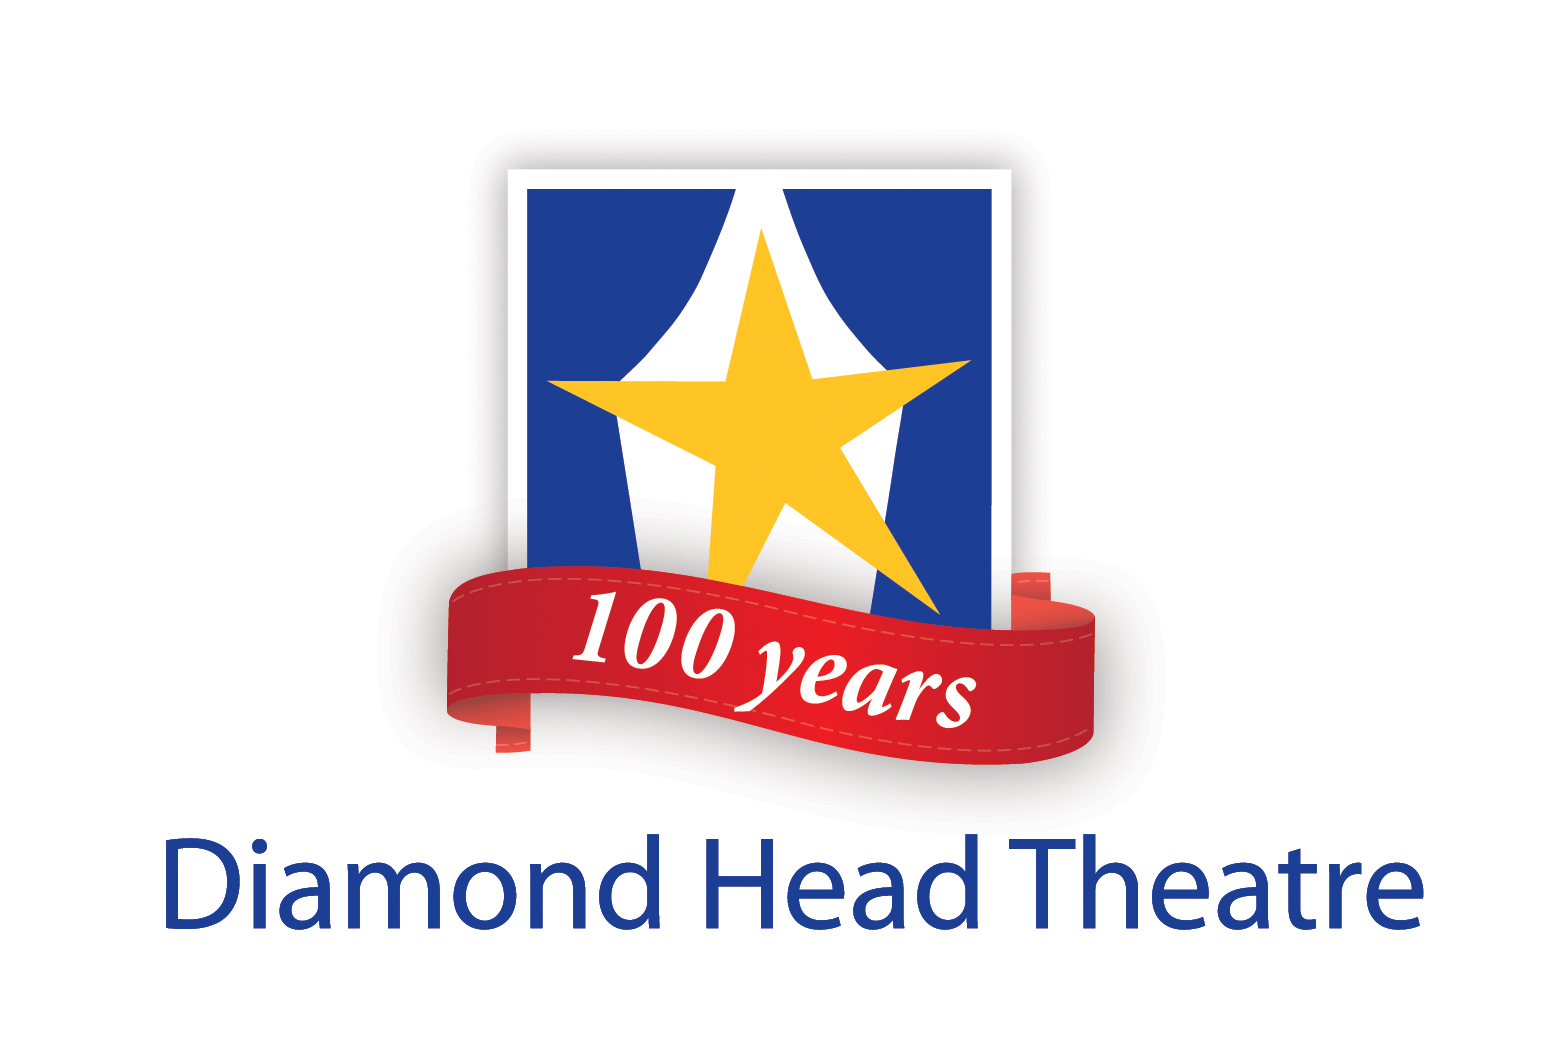 Diamond Head Theatre